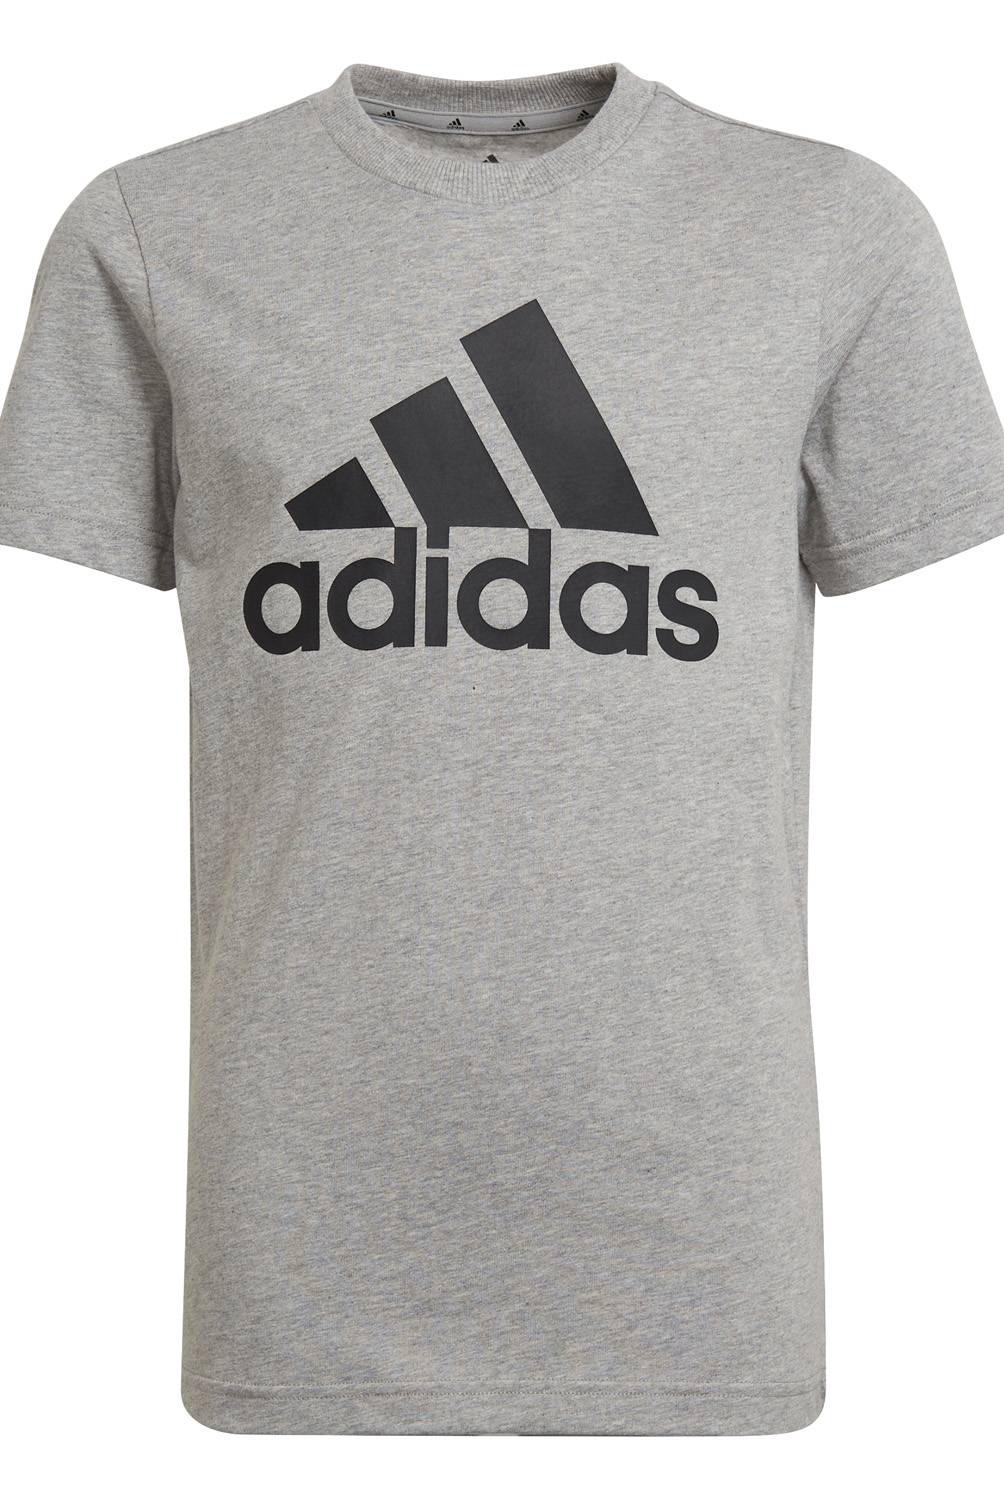 ADIDAS - Camiseta Niño Adidas